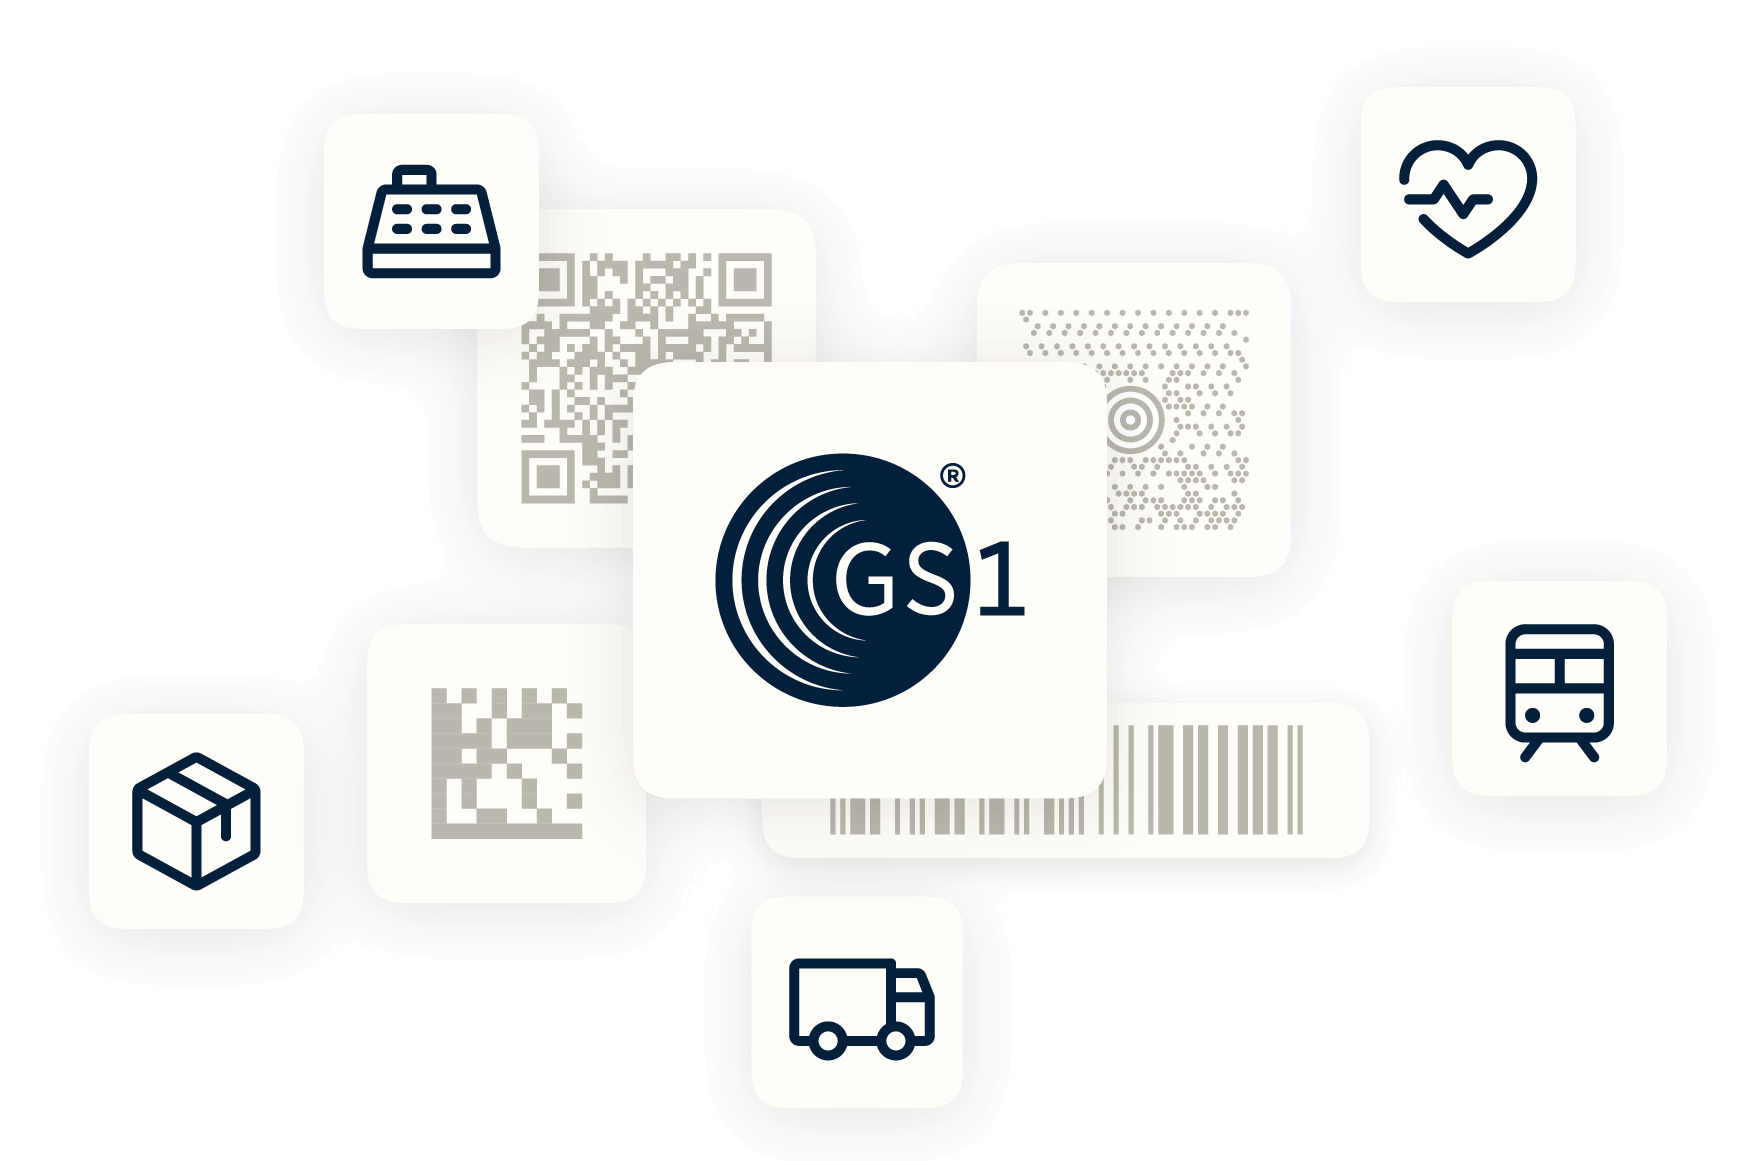 GS1 logo alongside a barcode and QR Code